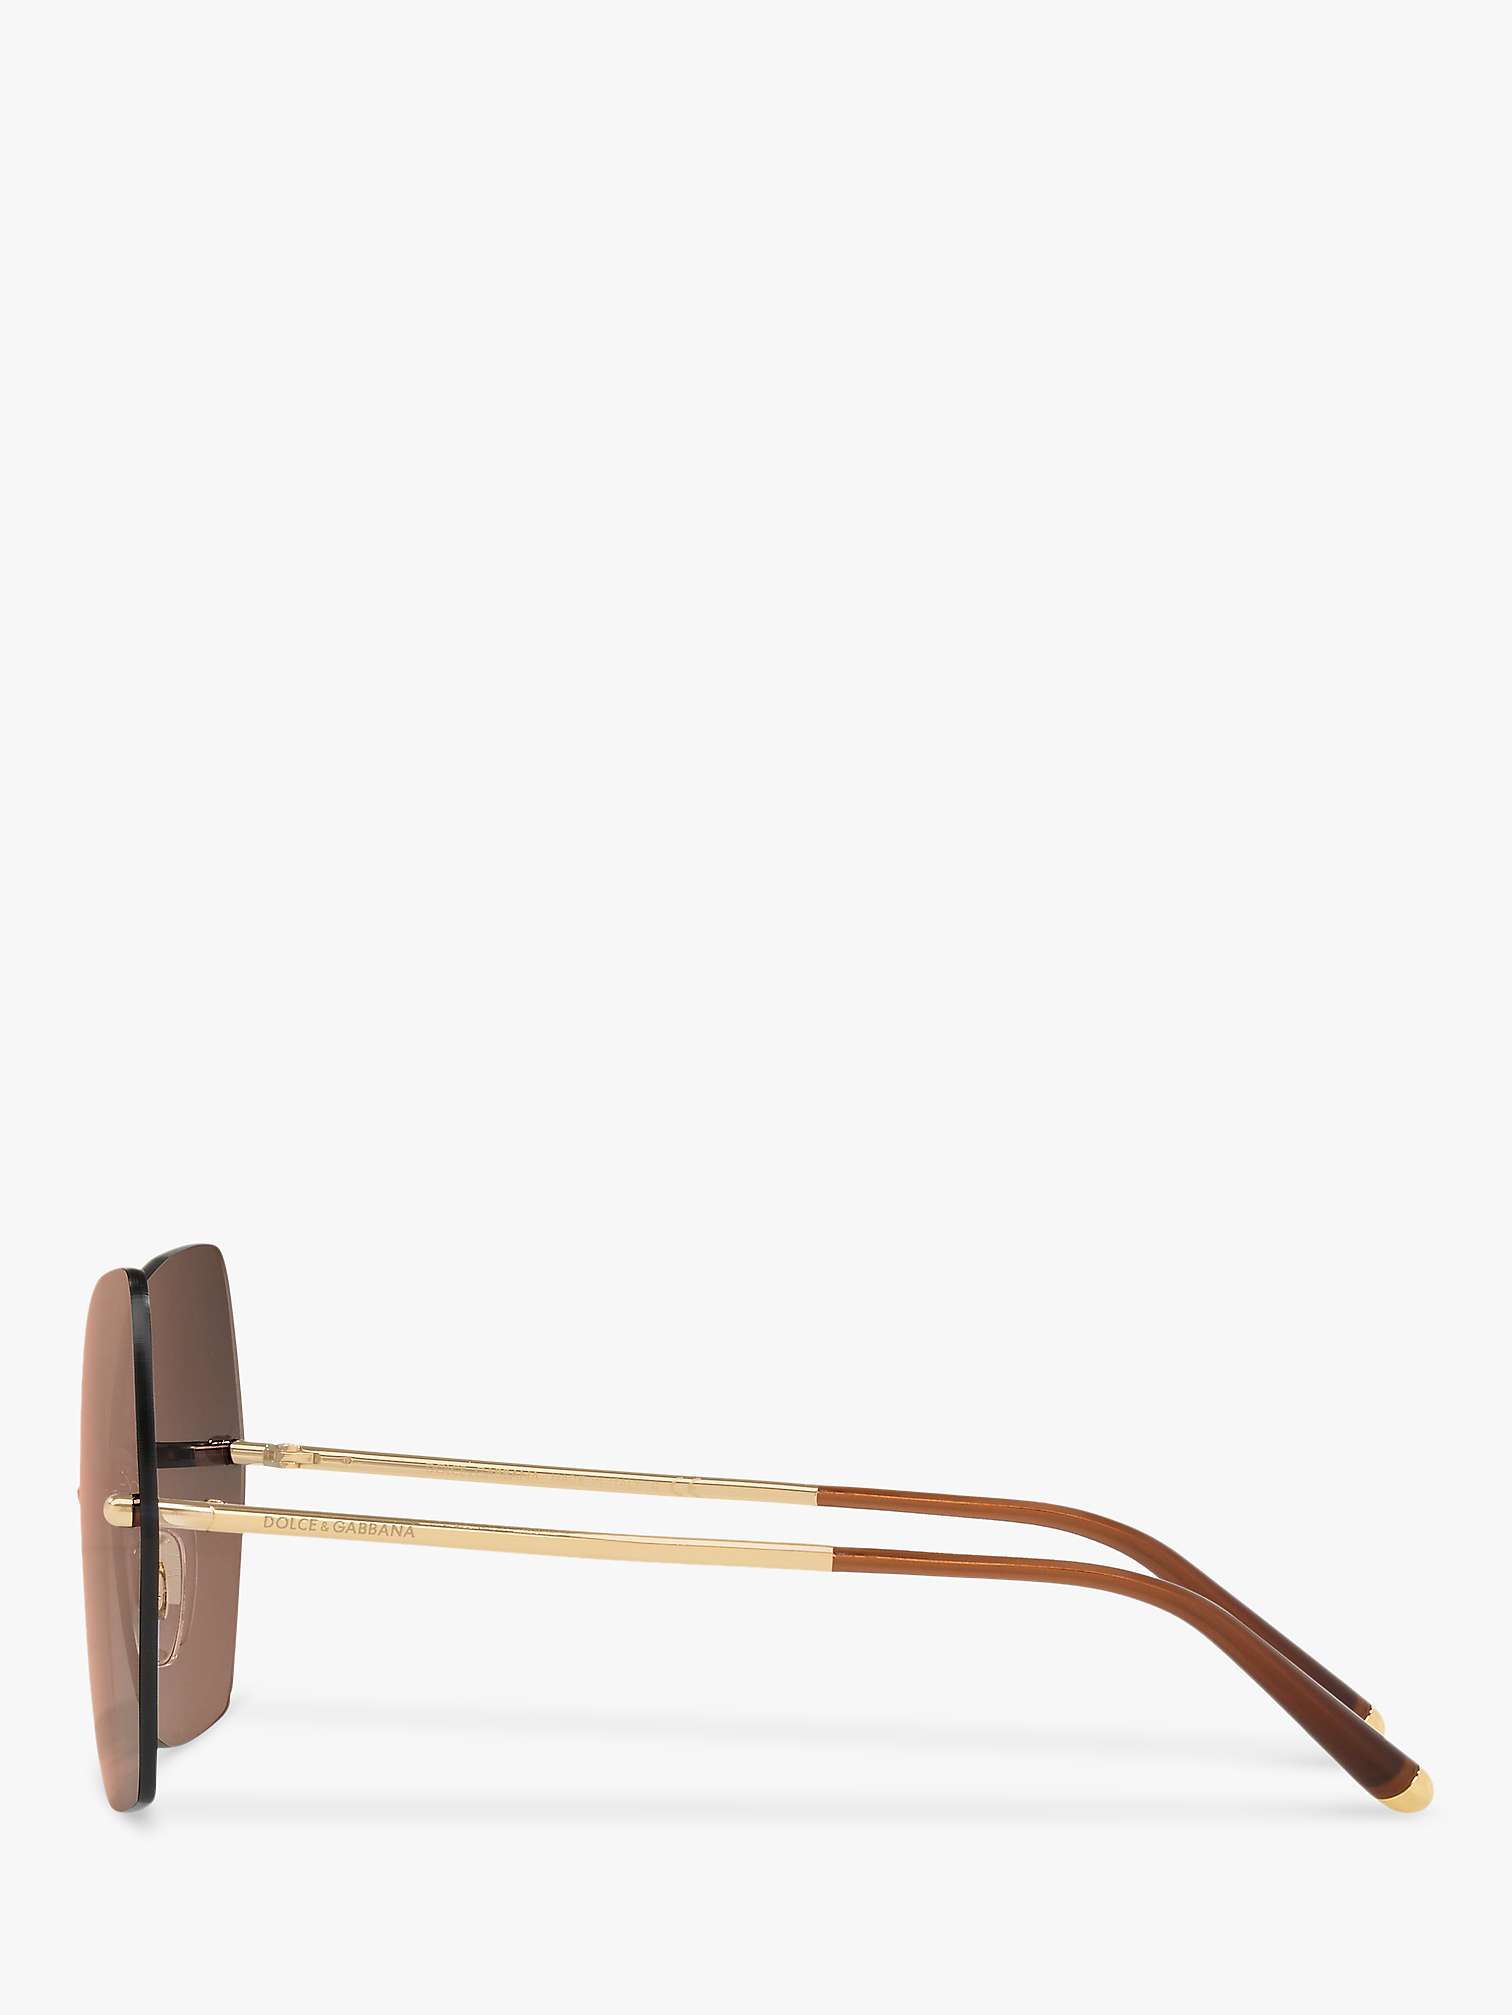 Buy Dolce & Gabbana DG2204 Women's Geometric Sunglasses, Gold/Brown Gradient Online at johnlewis.com